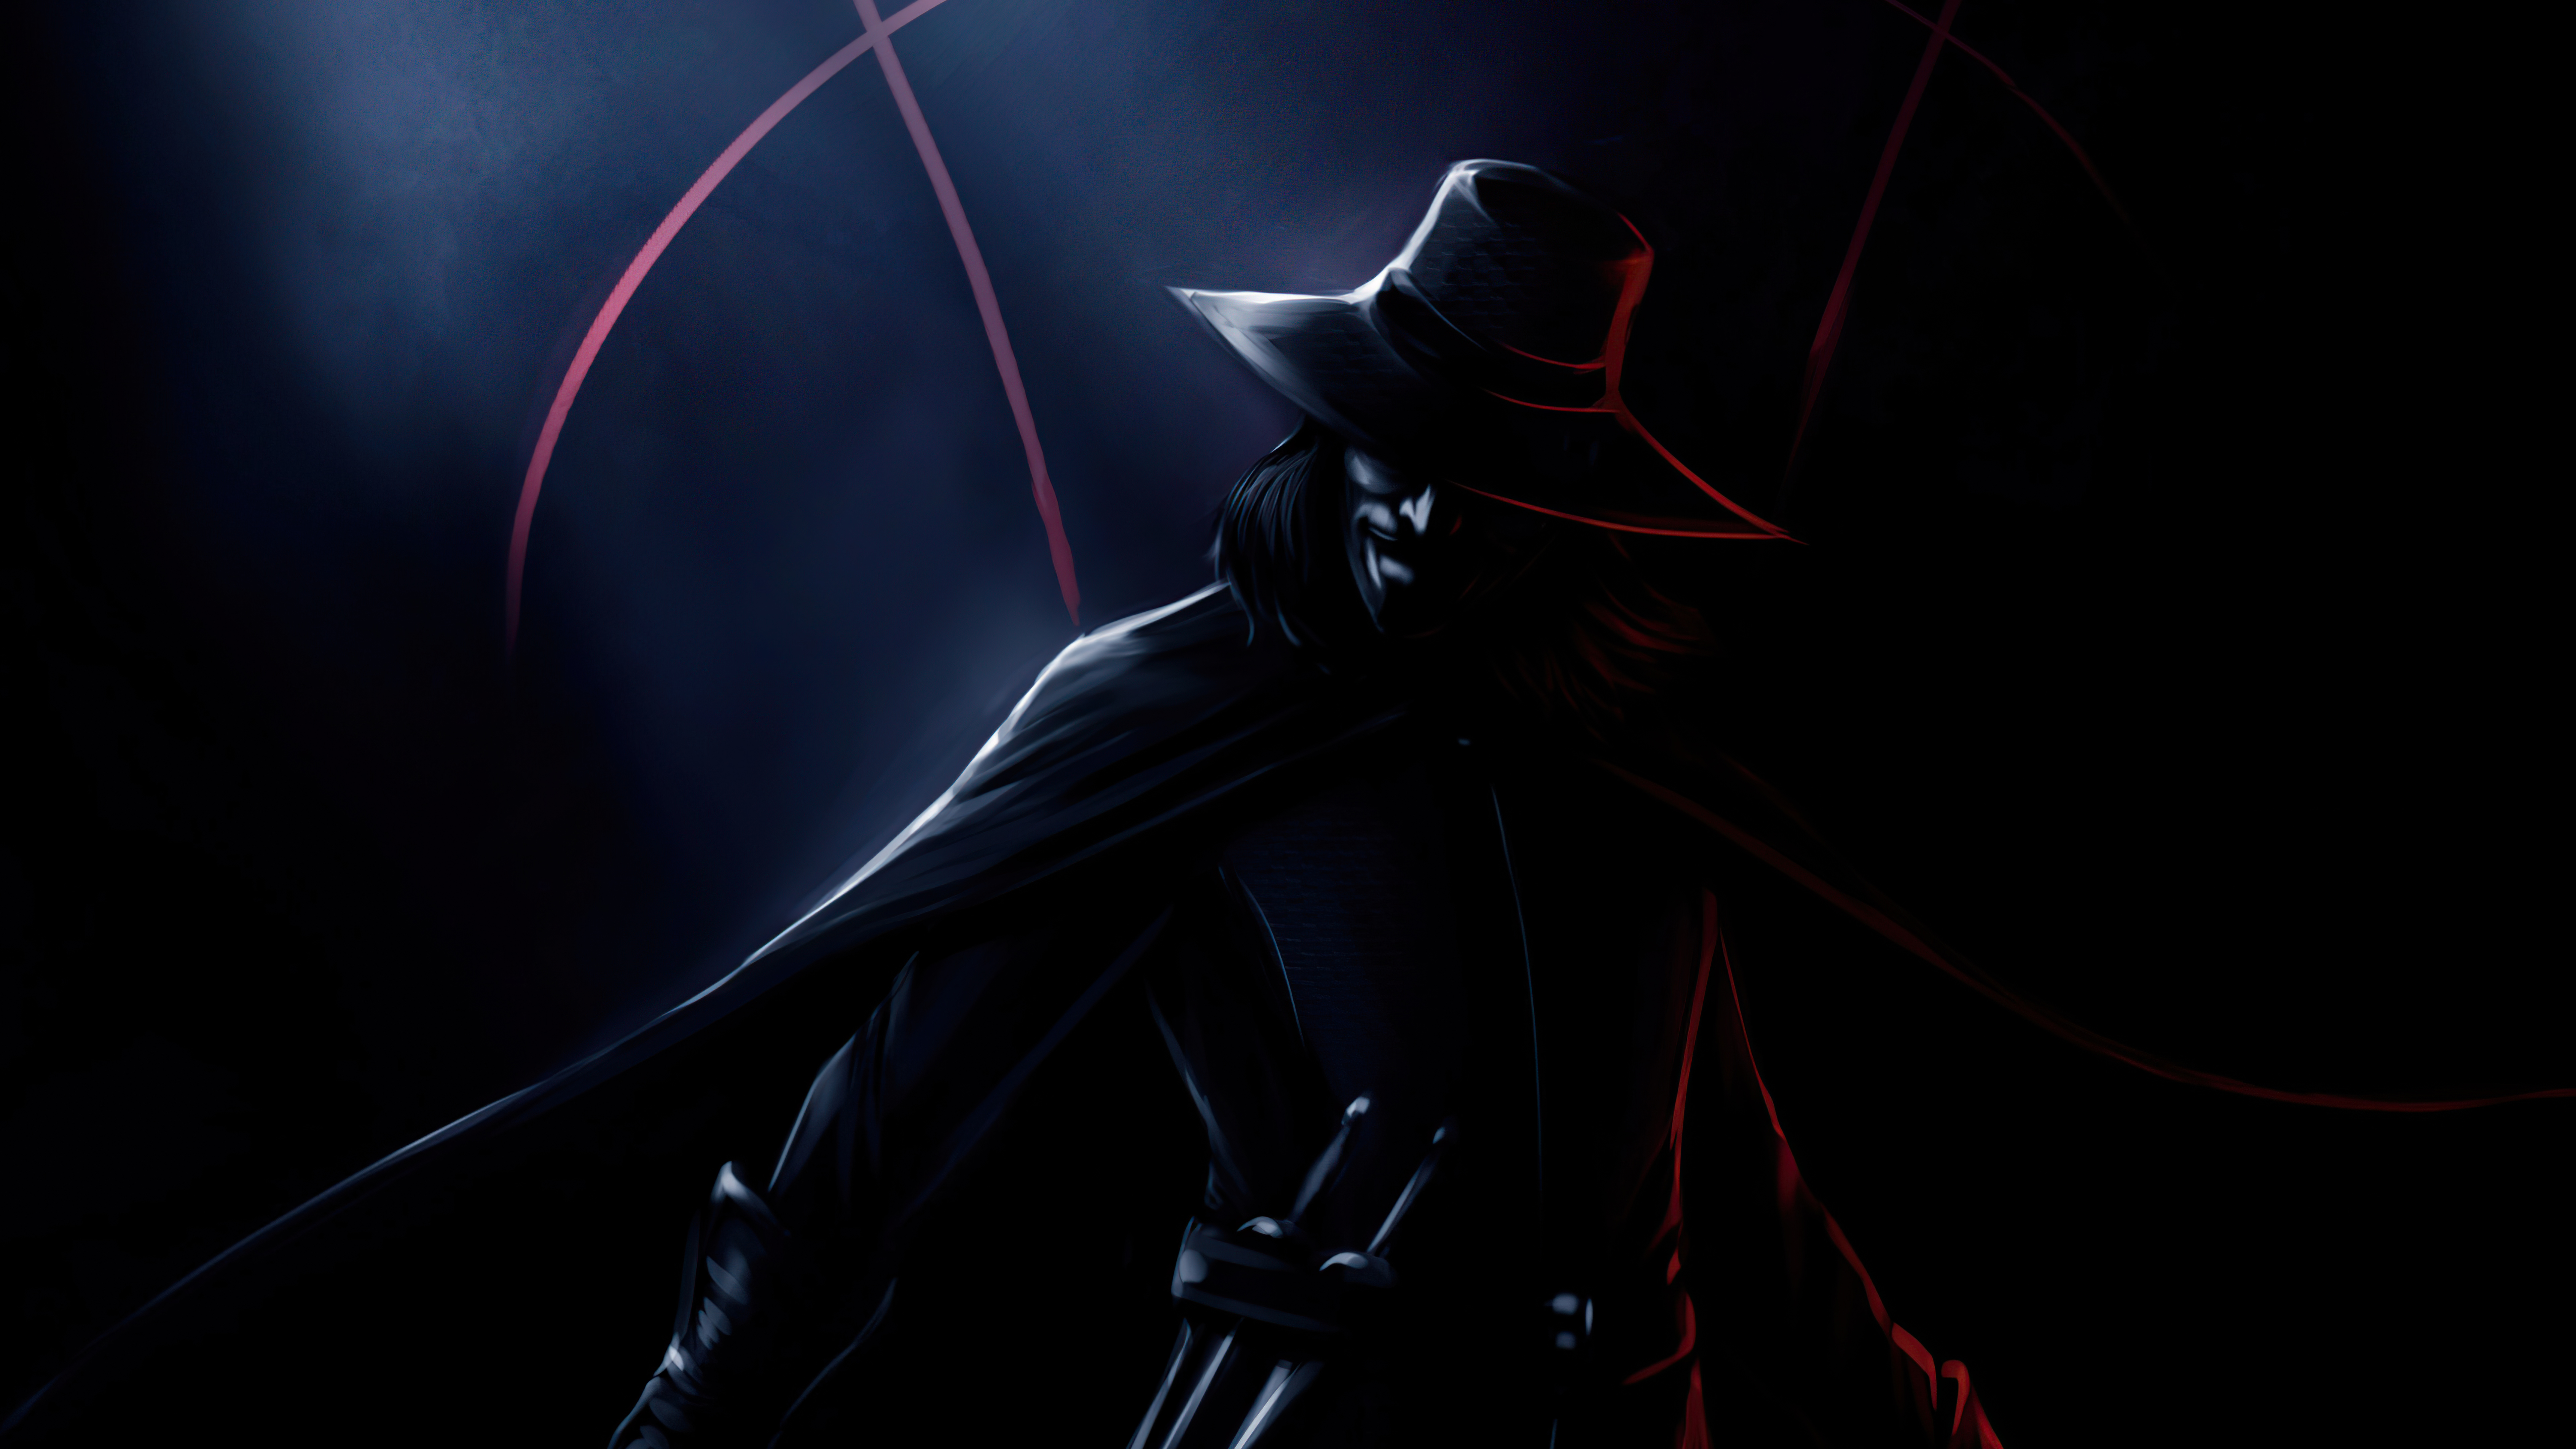 V For Vendetta 8k Ultra HD Wallpaper by Daniele Ariuolo